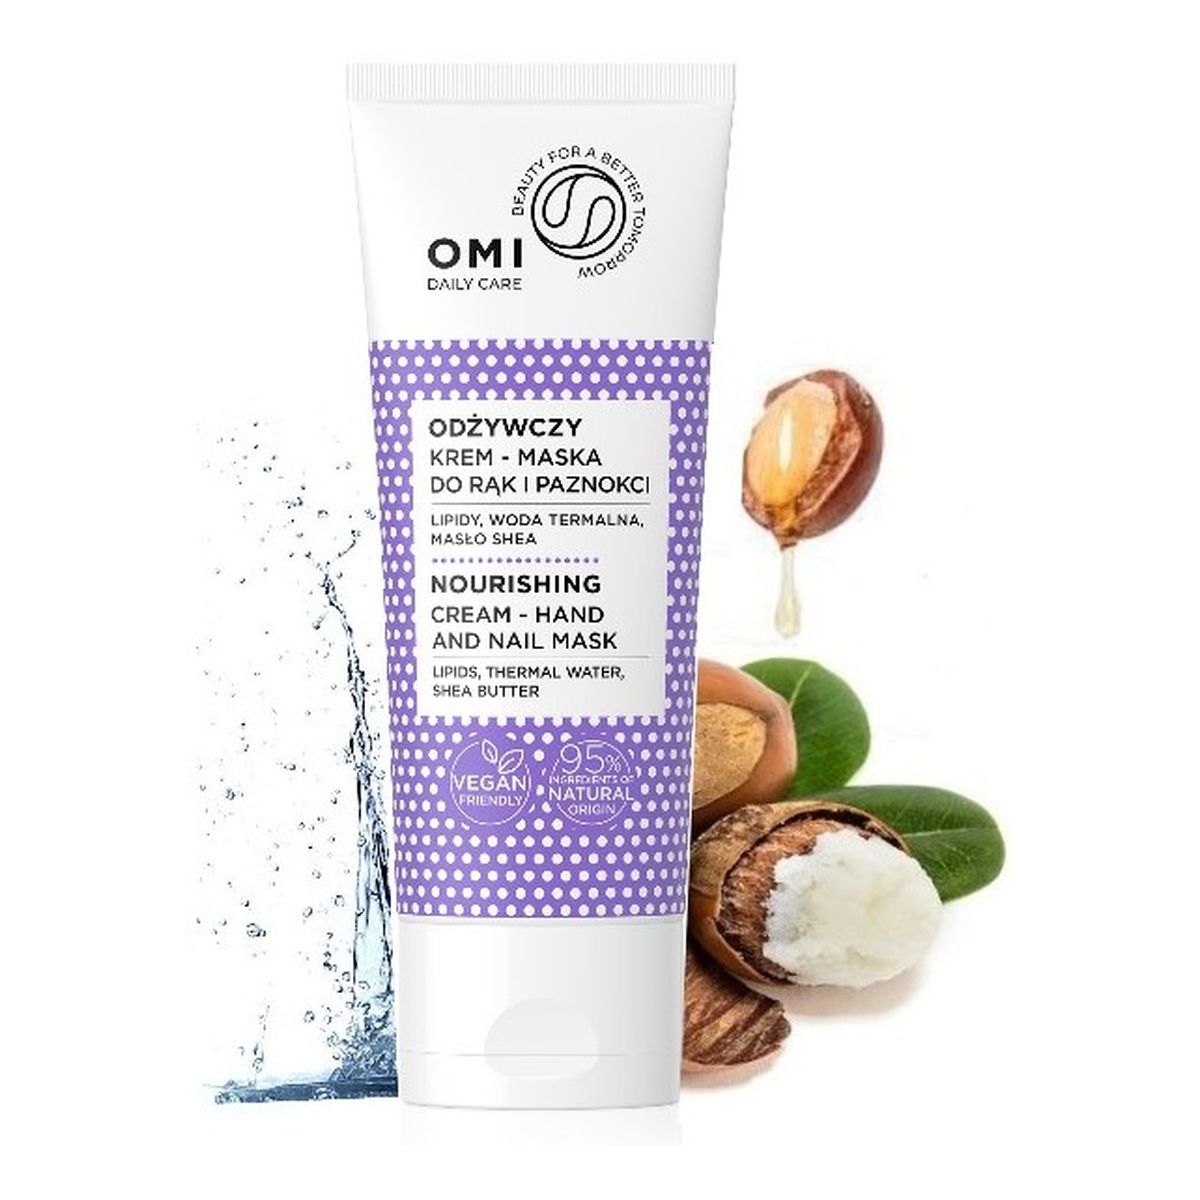 Omi Daily Care Krem-Maska do rąk i paznokci Nourishing Cream-Hand and Nail Mask 75ml